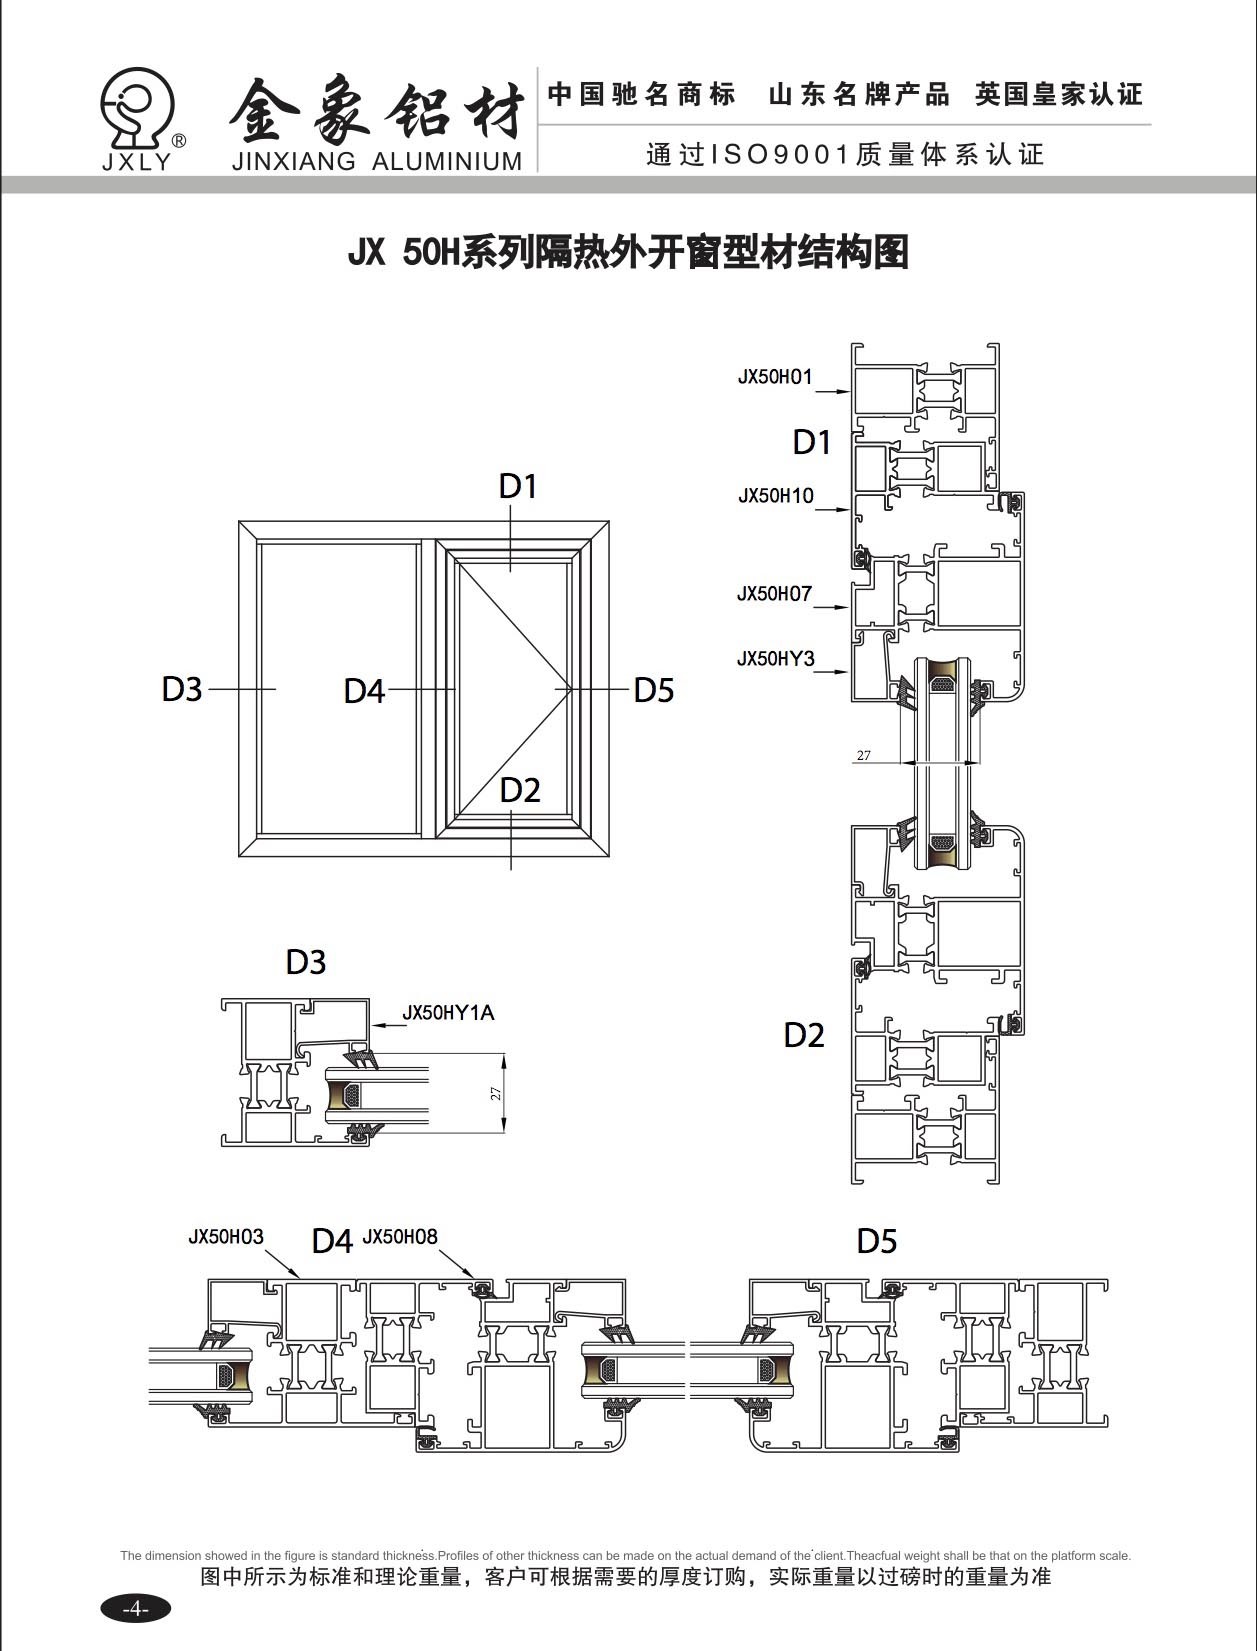 Jx50H系列隔热外开窗型材料结构图